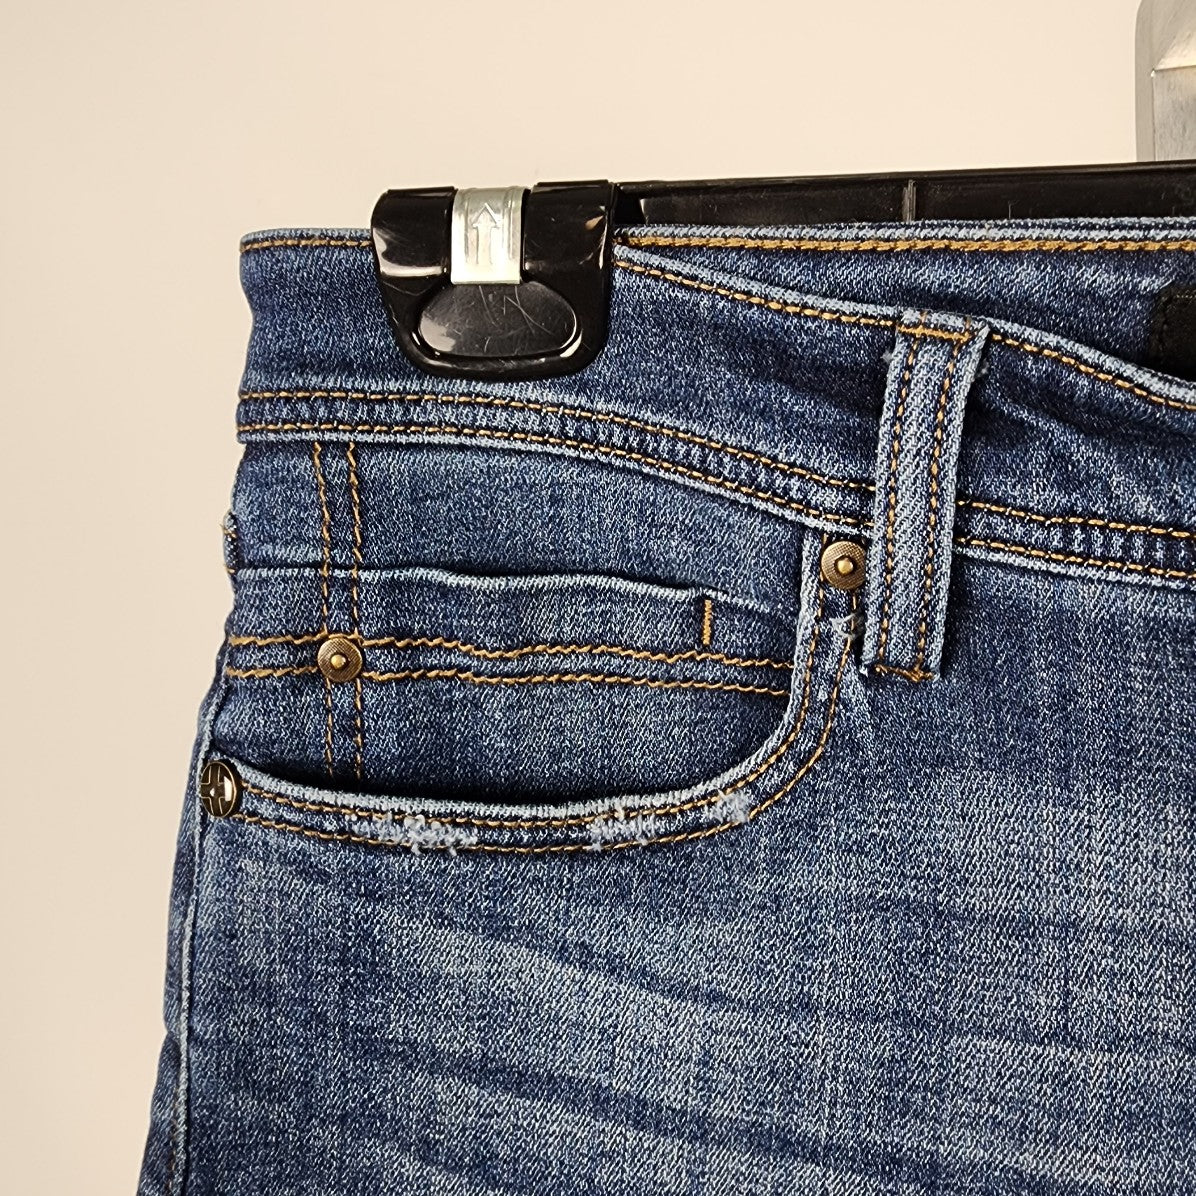 Liverpool Cotton Denim Jean Shorts Size 6/28